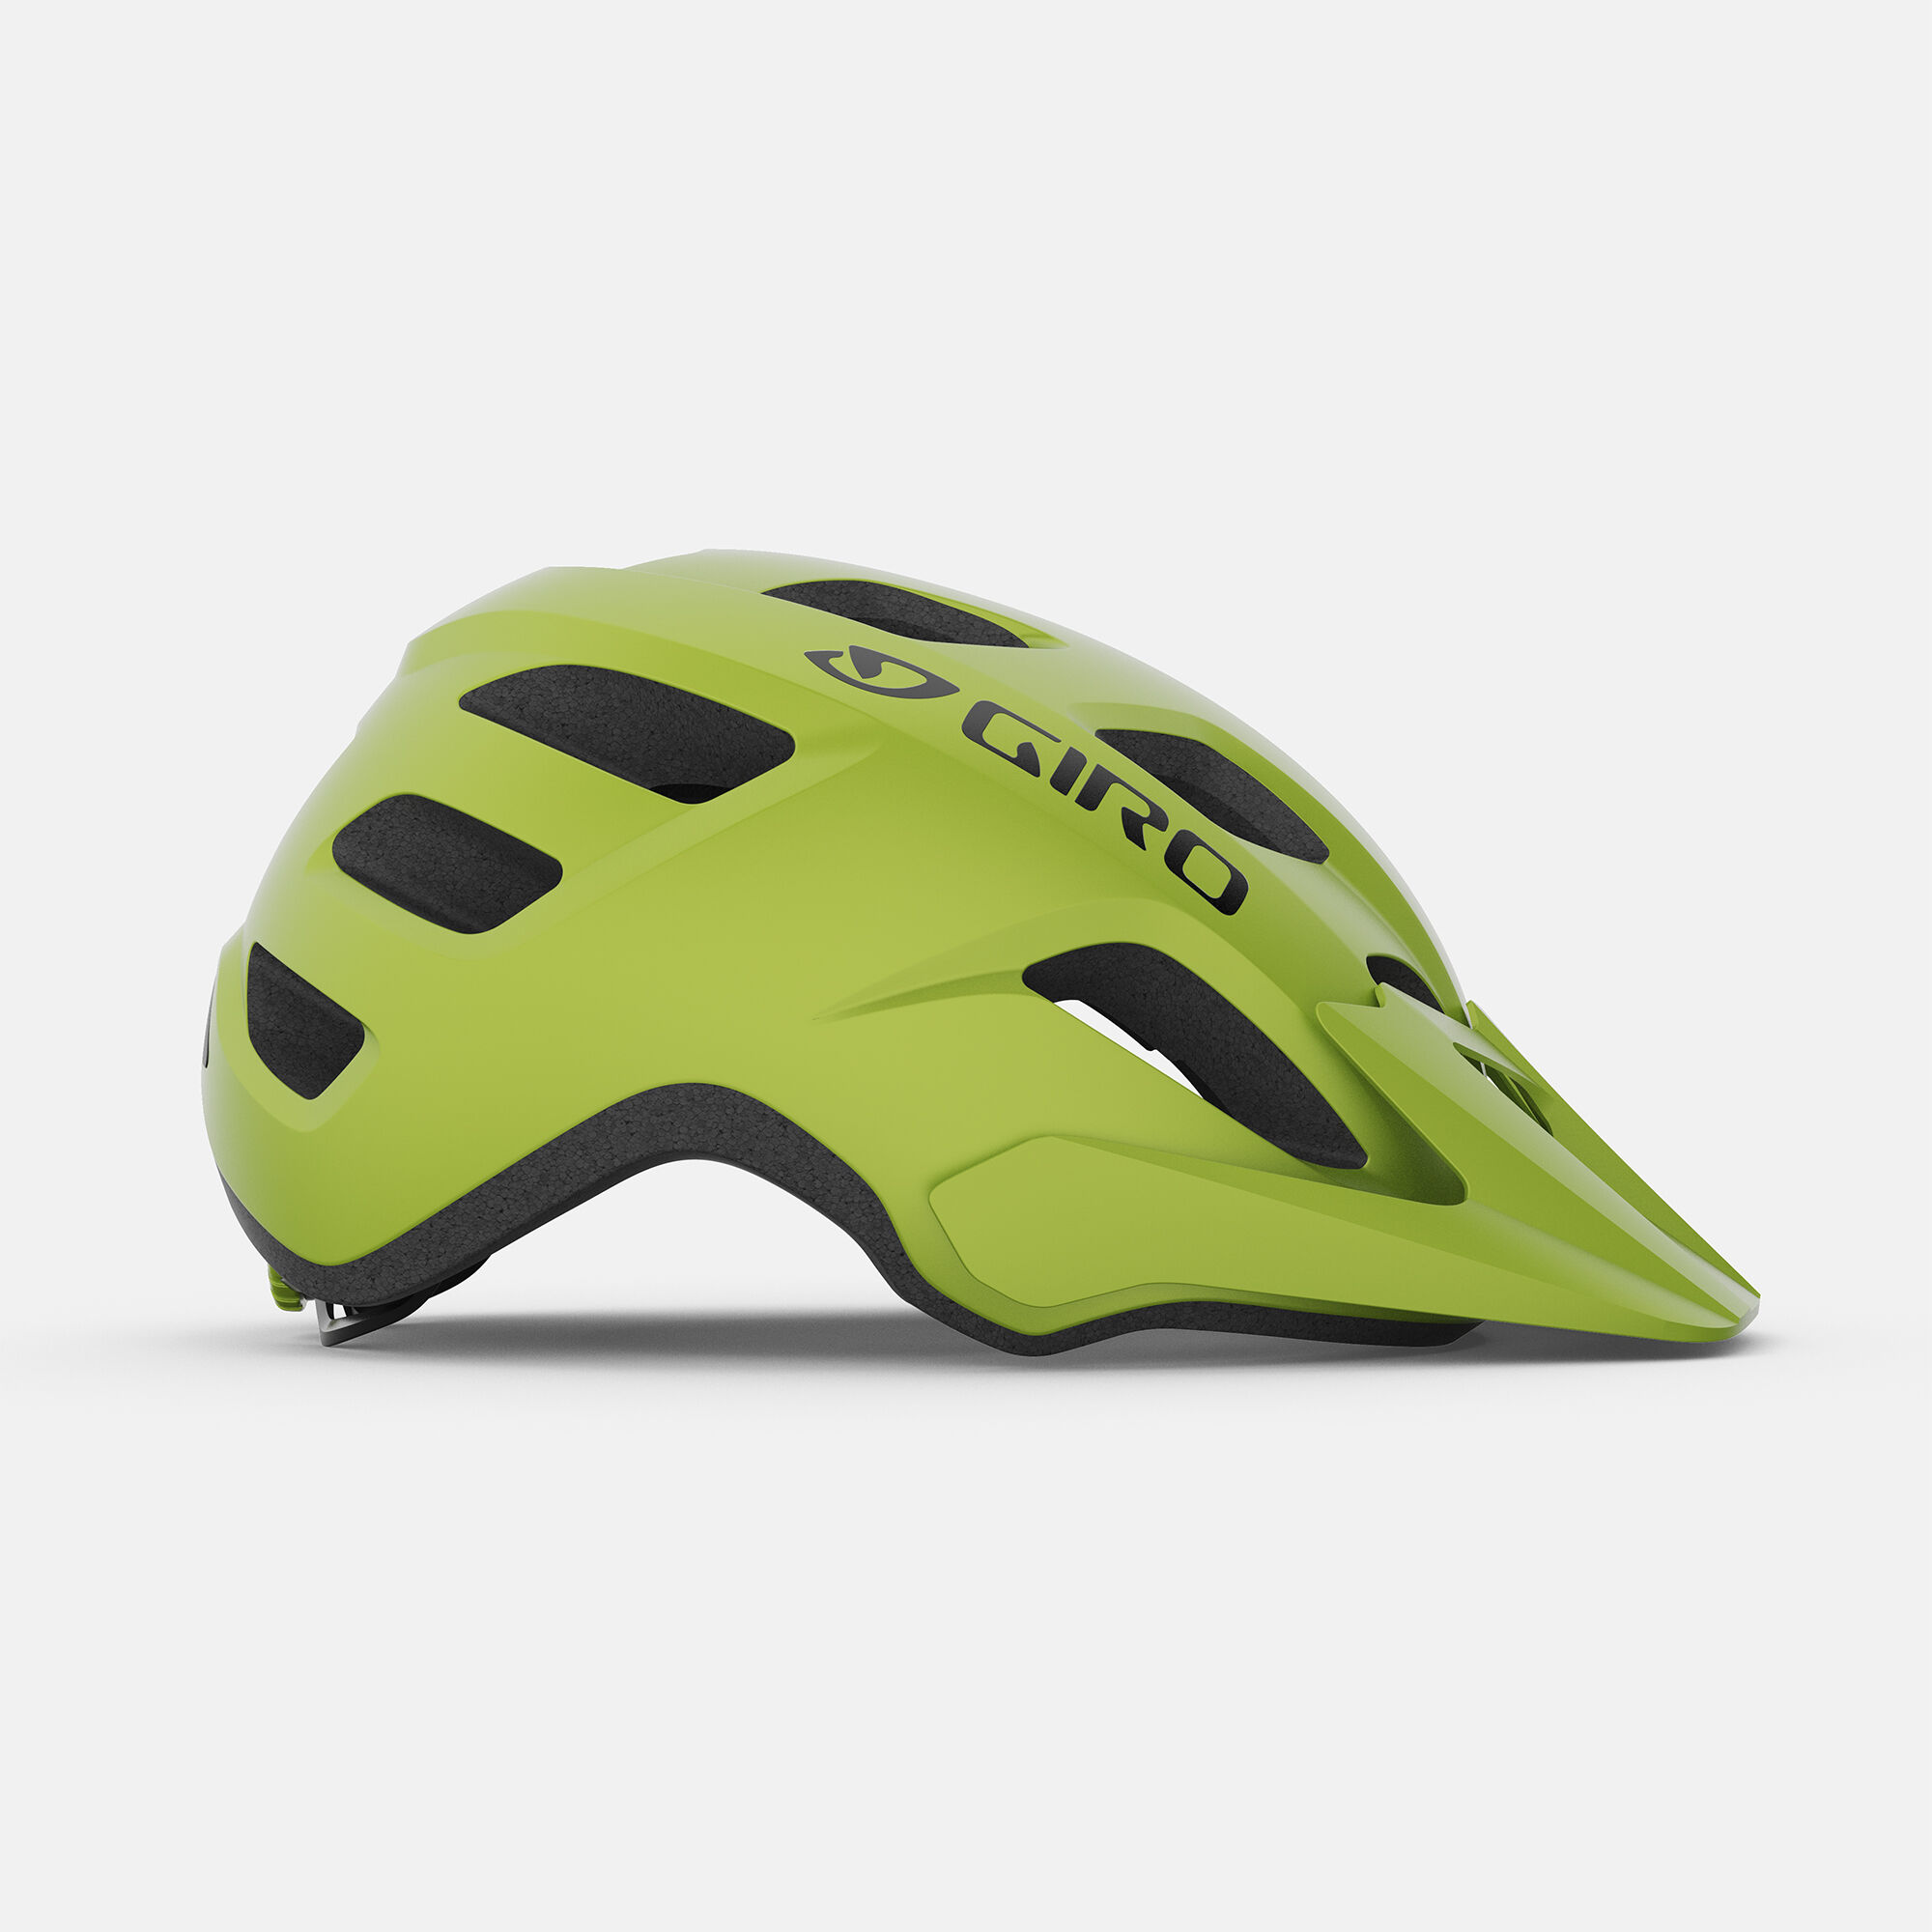 Fixture Unisize 54-61cm MTB Bicycle Bike Helmet Giro Matte Grey